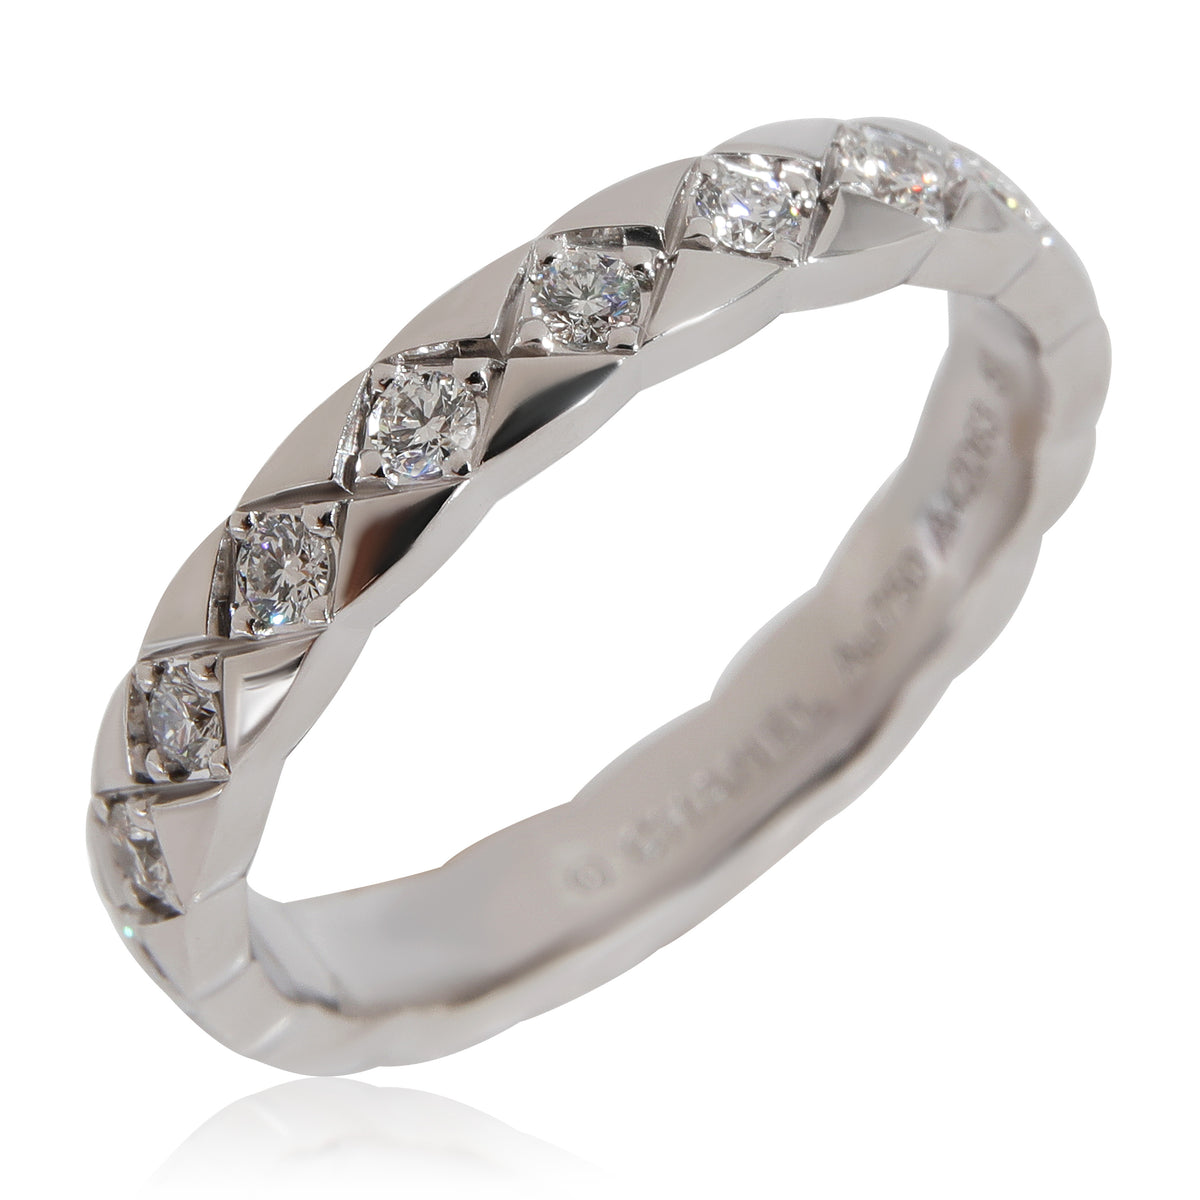 Chanel Coco Crush Diamond Ring in 18k White Gold 0.34 CTW